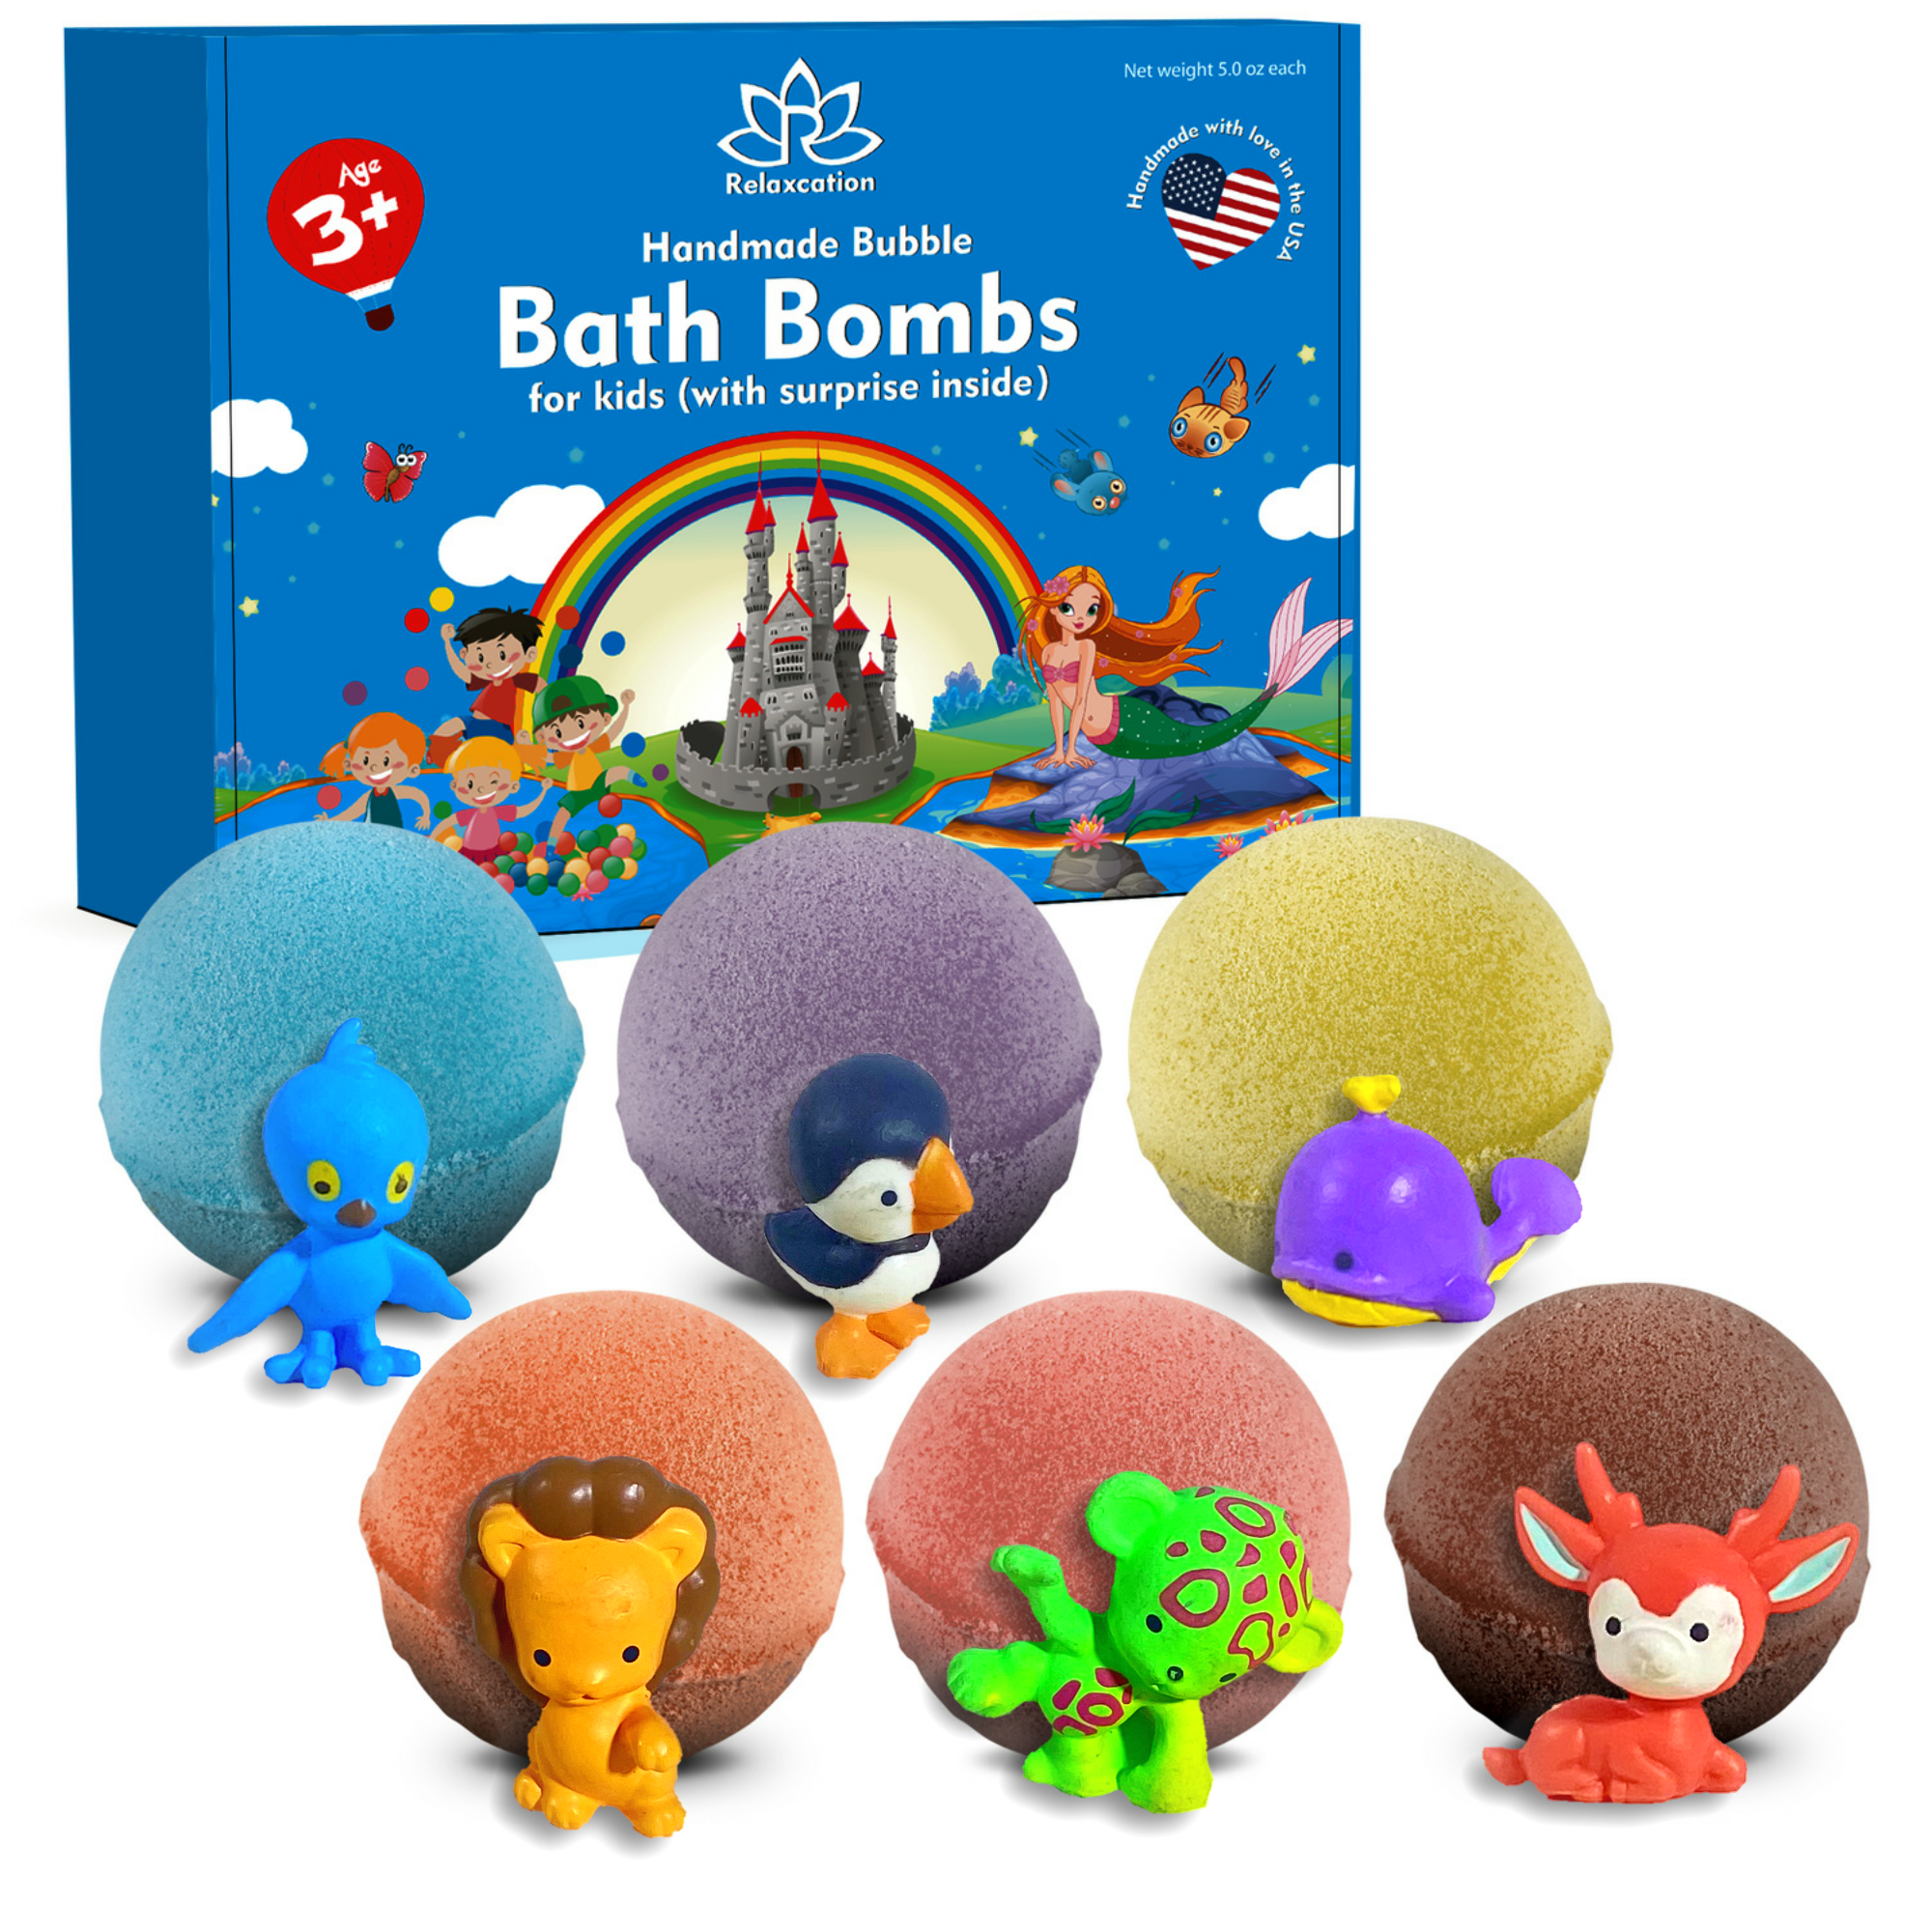 Wonderful Bath Bombs - Buy DIY Bath Bombs Toys, Bath Bomb Set, Fun